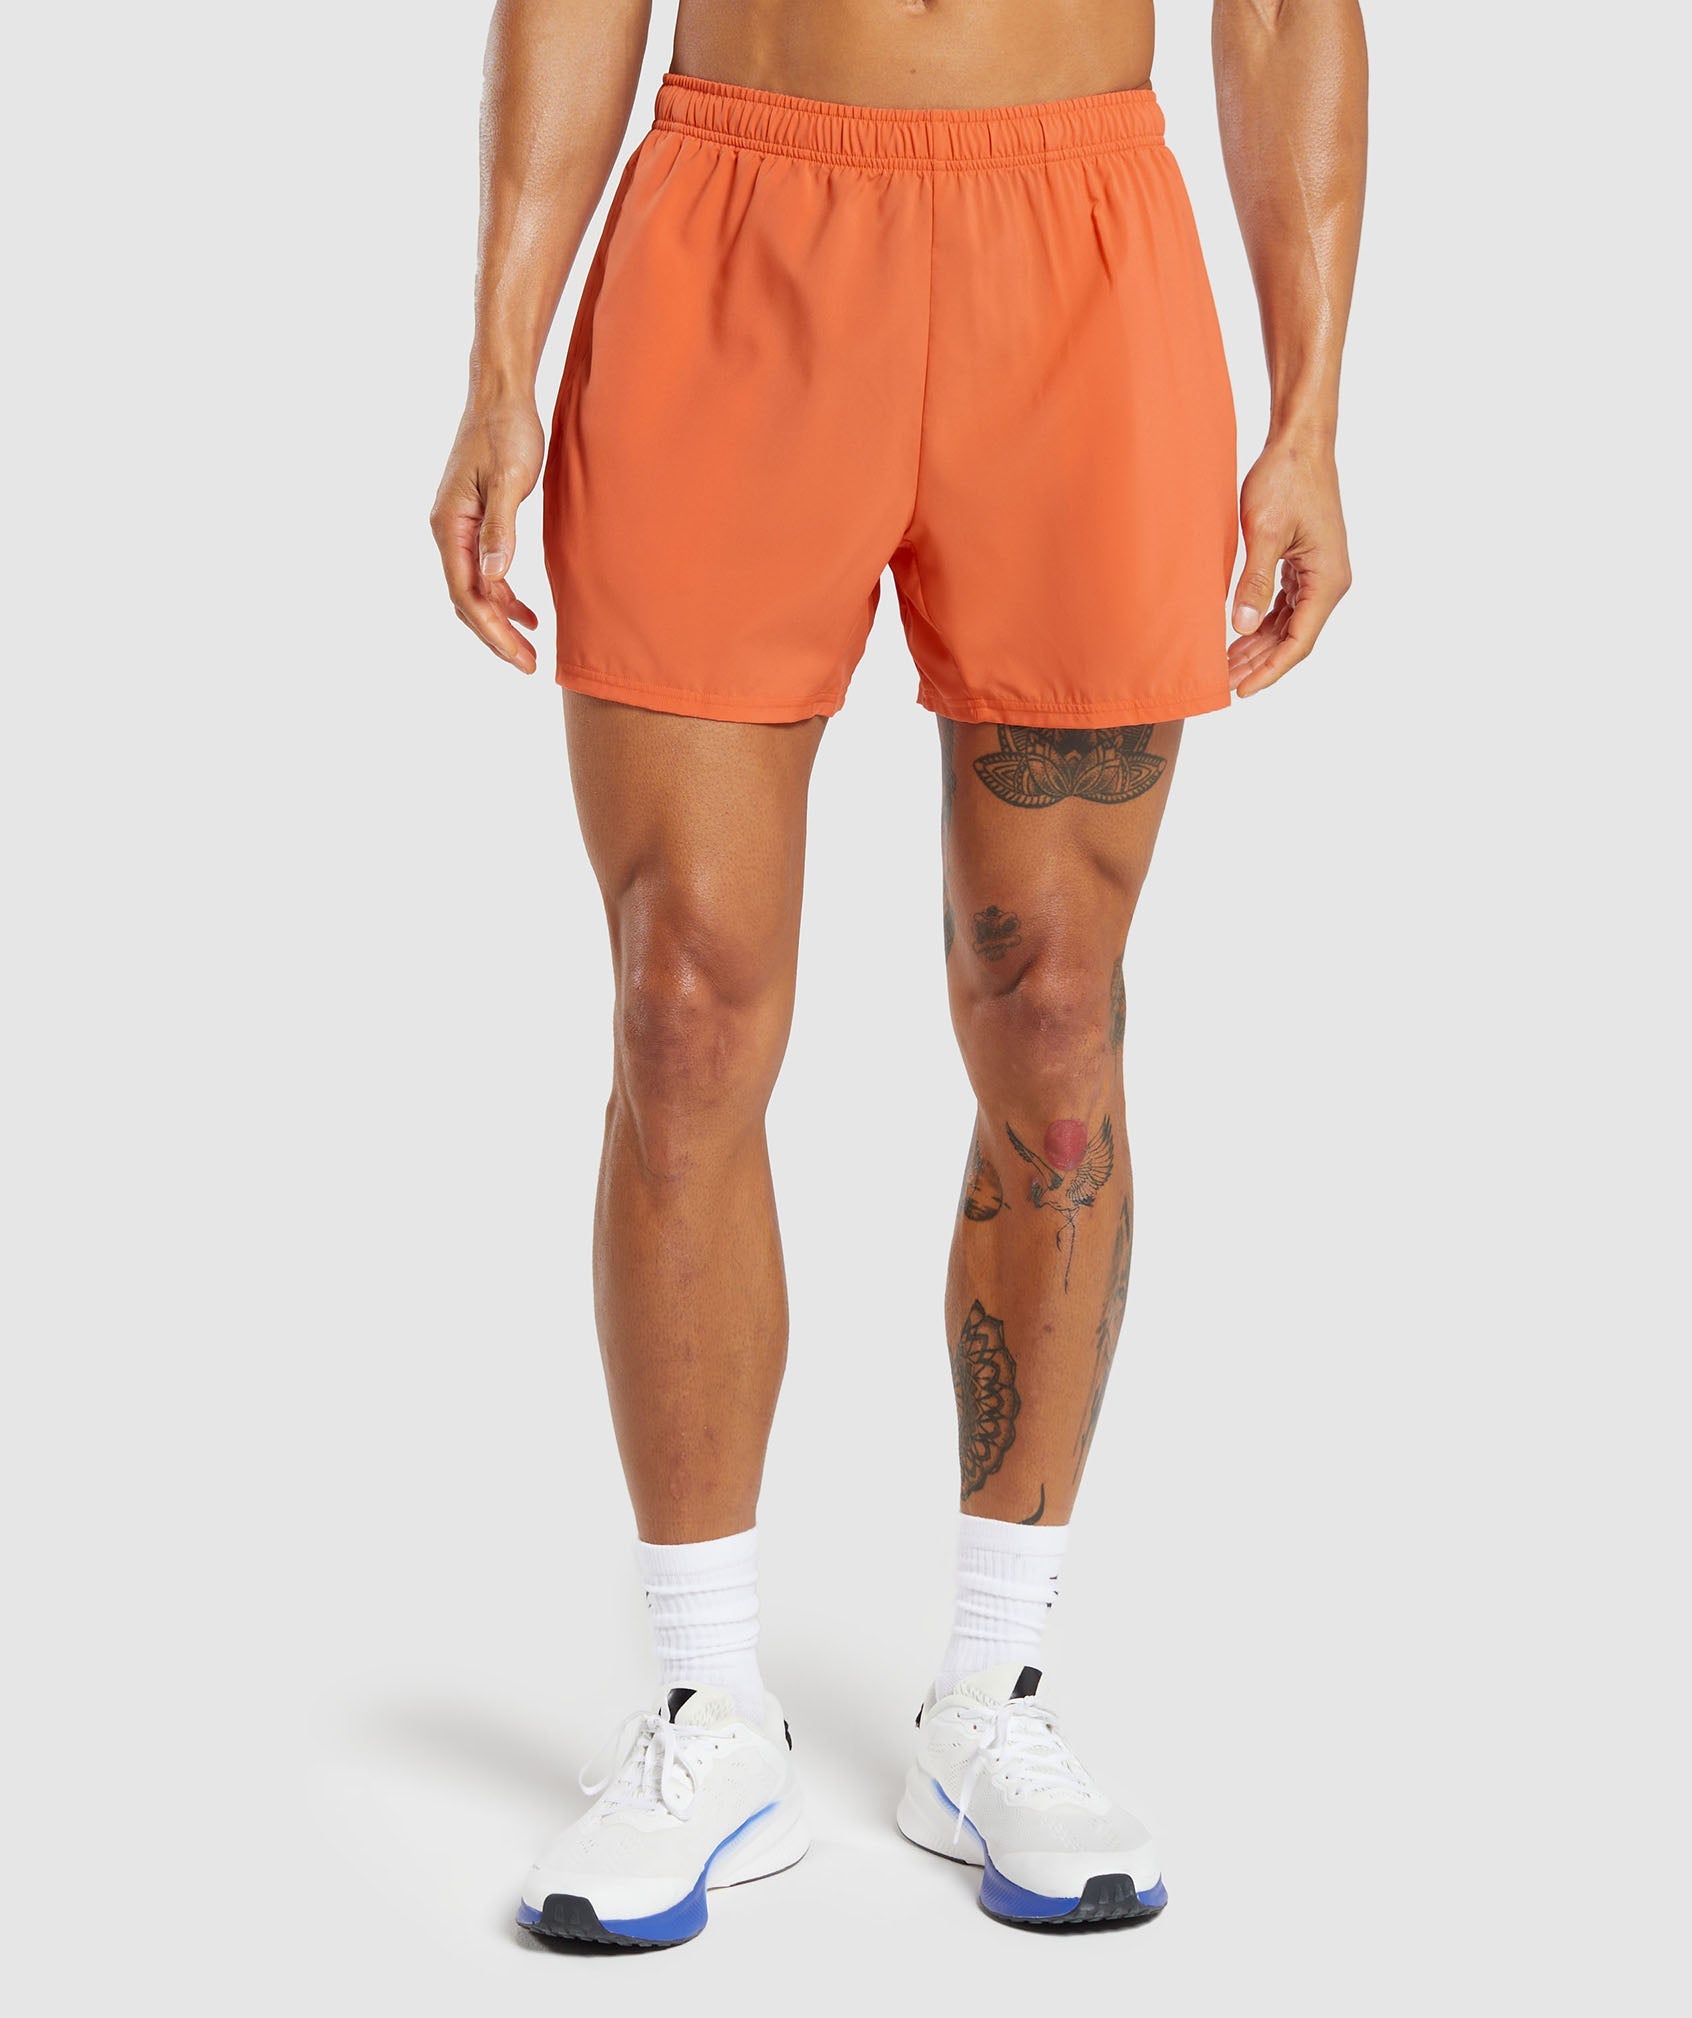 Arrival 5" Shorts en Ignite Orange